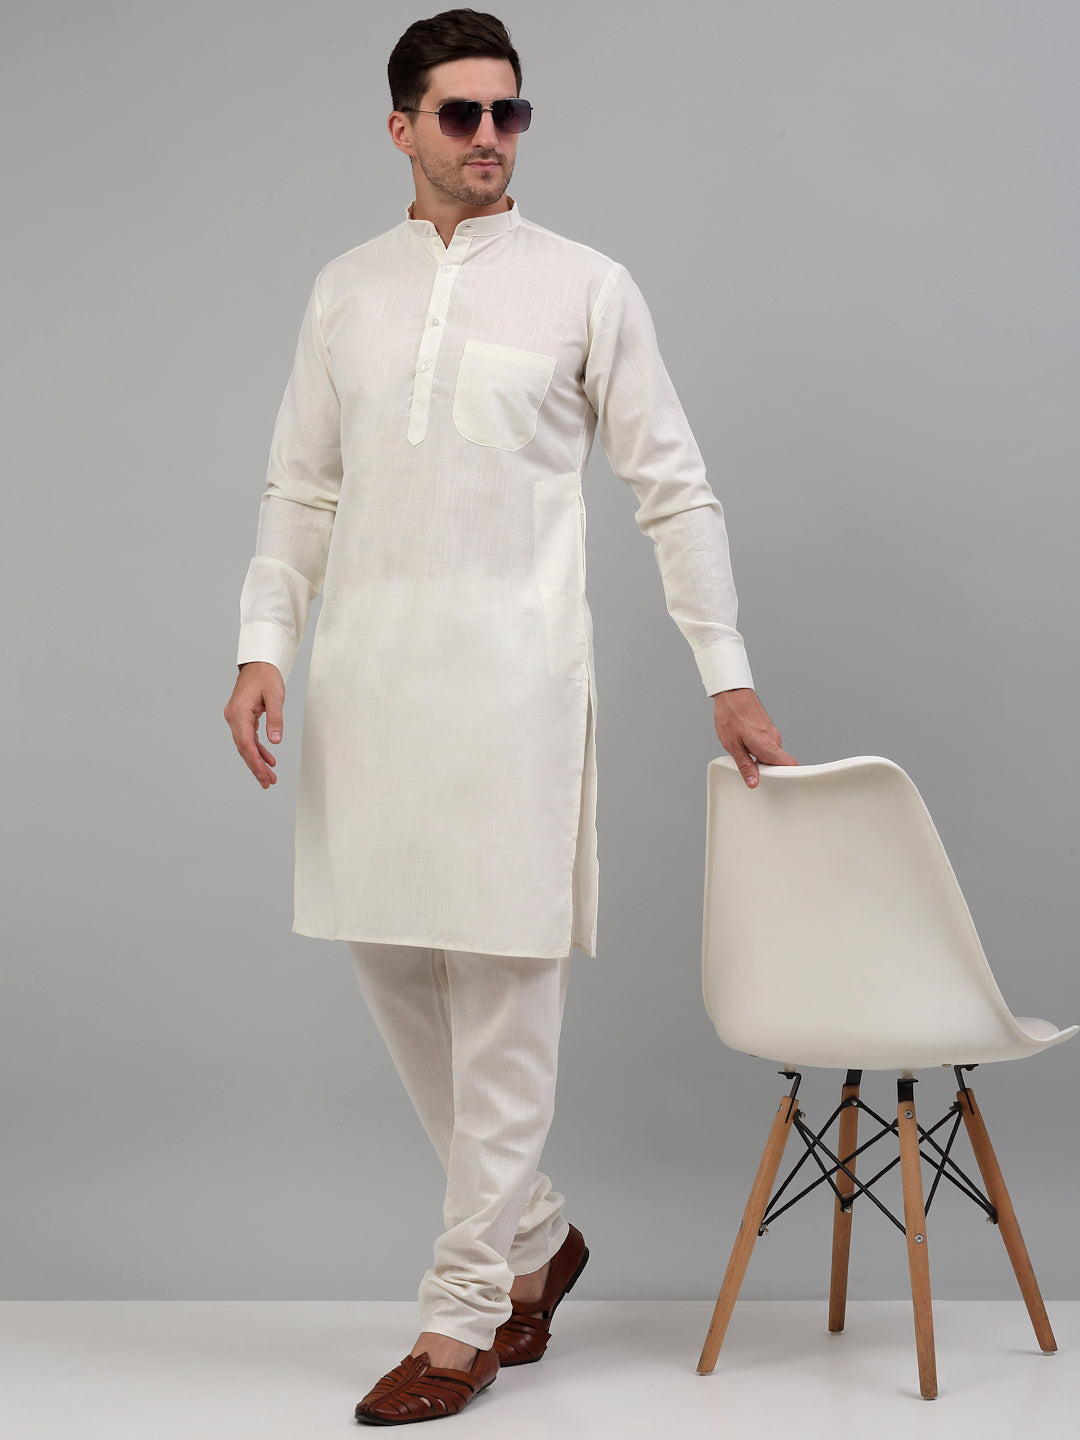 Men Nehru Jacket with White Kurta Pyjama.